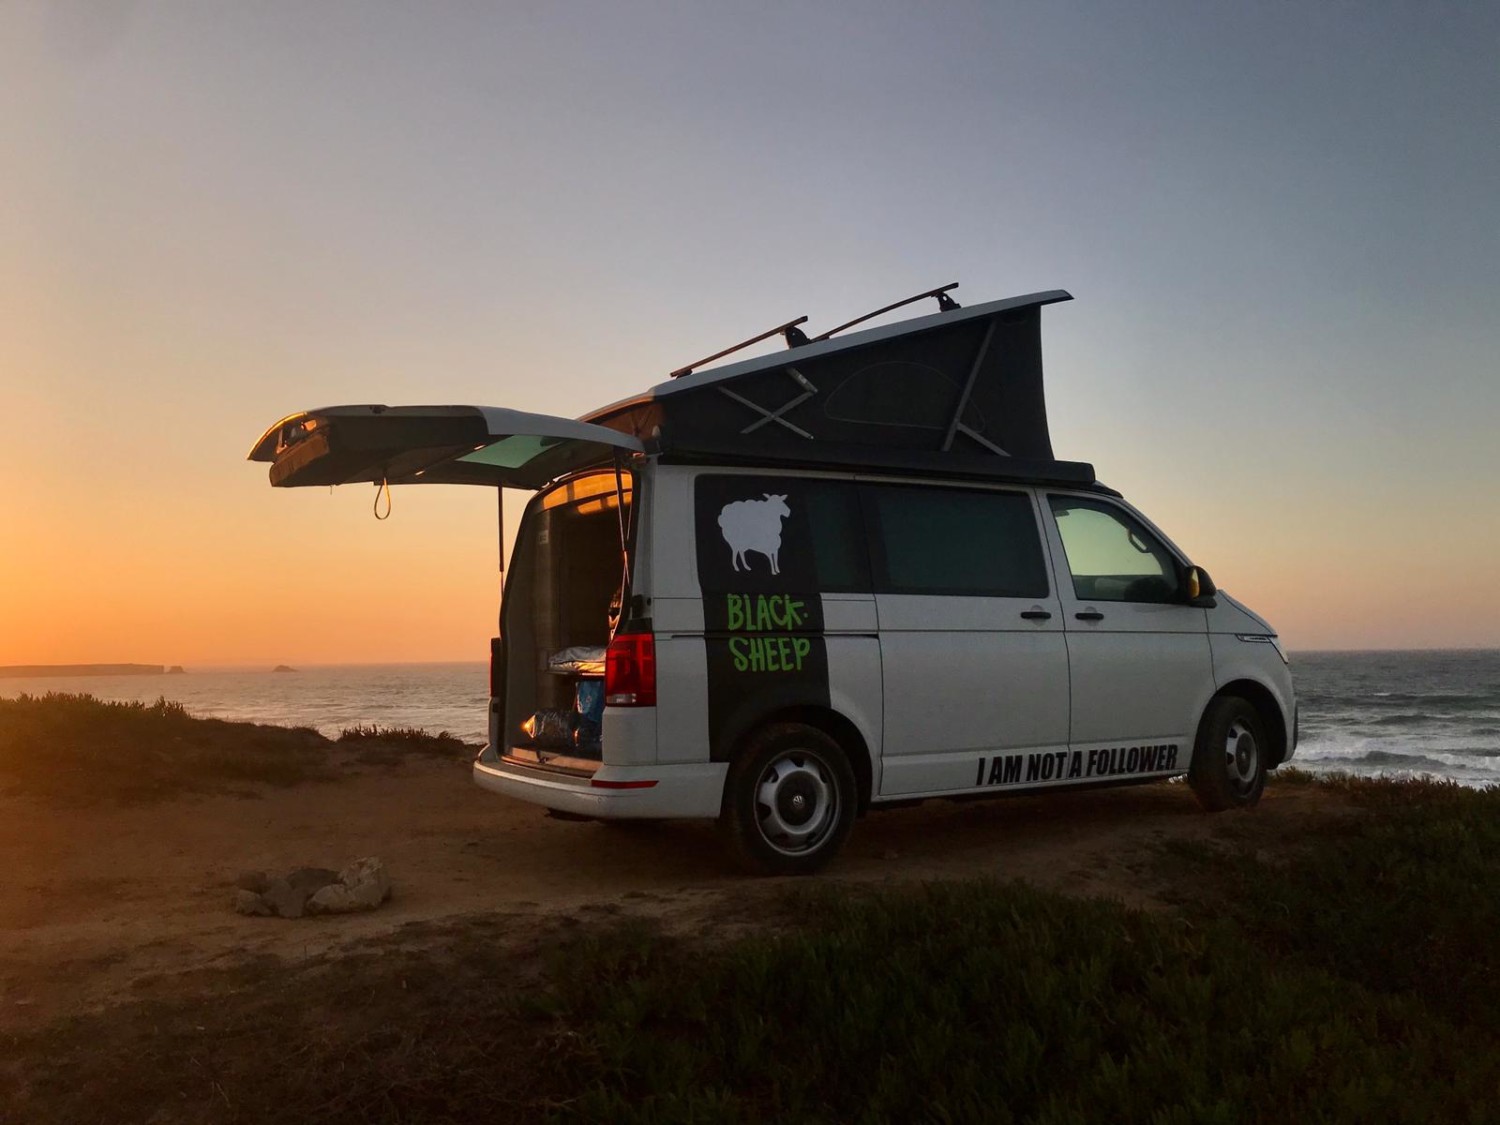 Image 2020-10-24 at 19.25.55 (1) @Nomads Surfing Volkswagen California Automne Portugal Surf